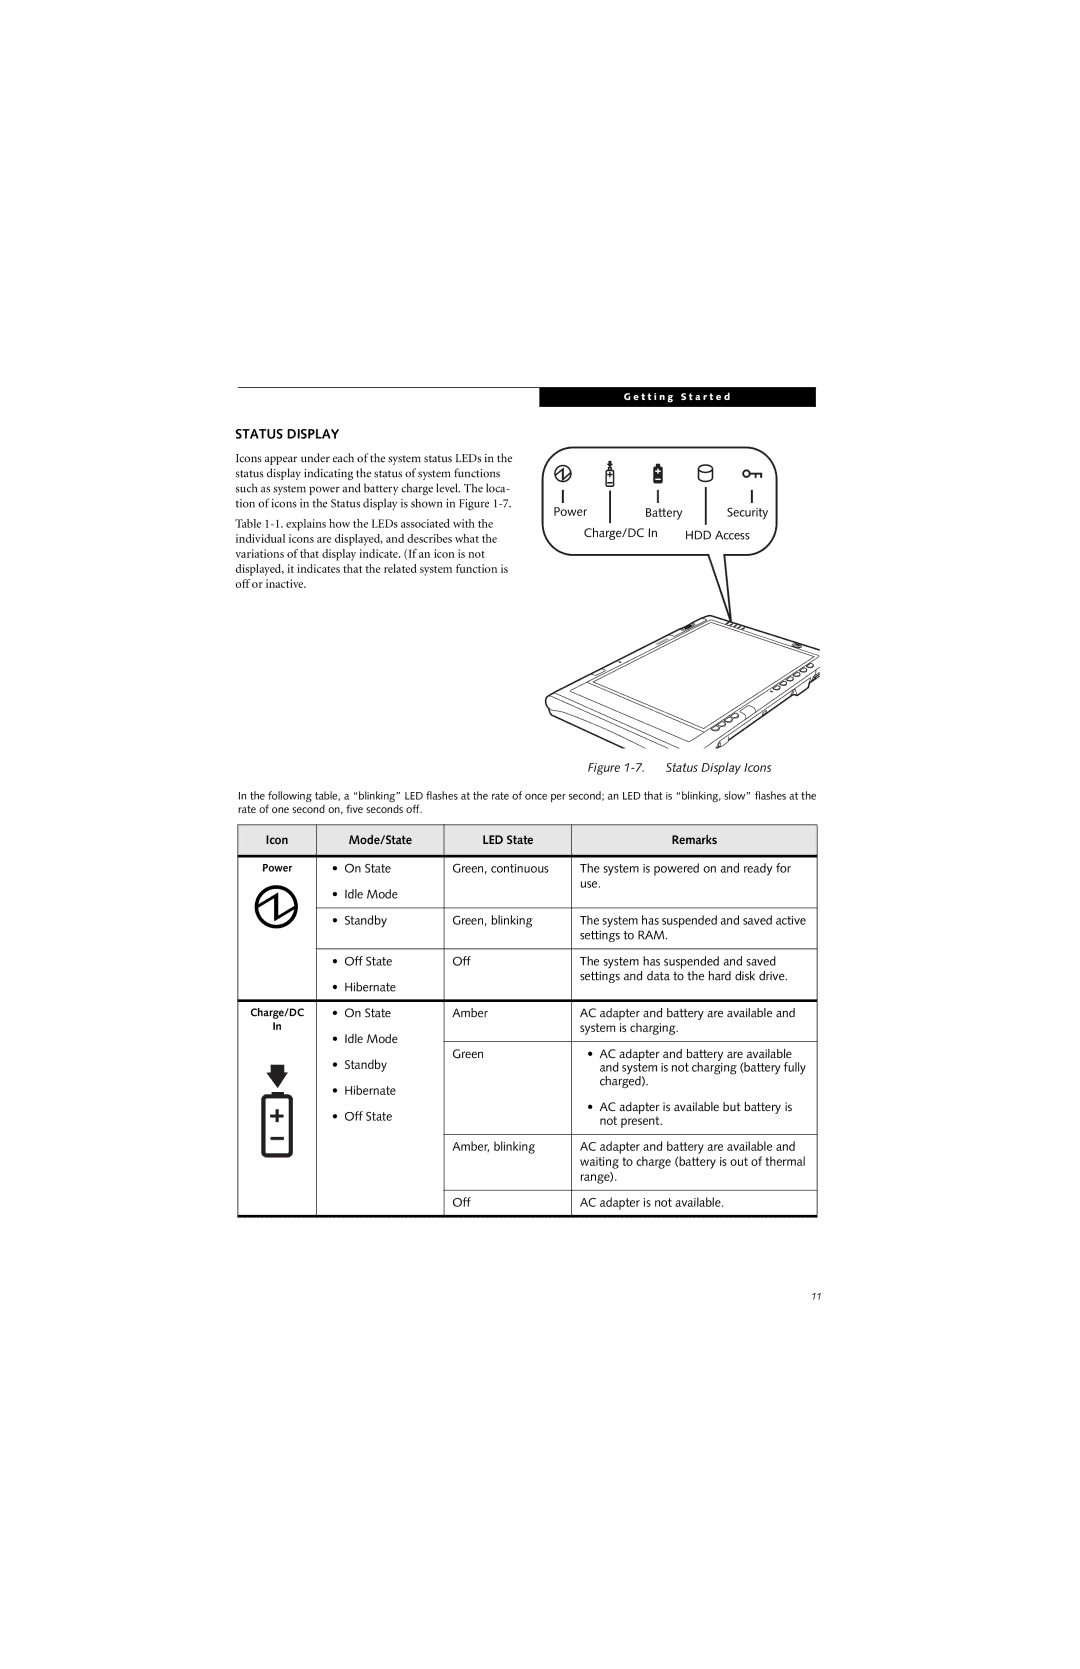 Fujitsu ST5111, ST5112 manual Status Display, Icon Mode/State LED State Remarks 